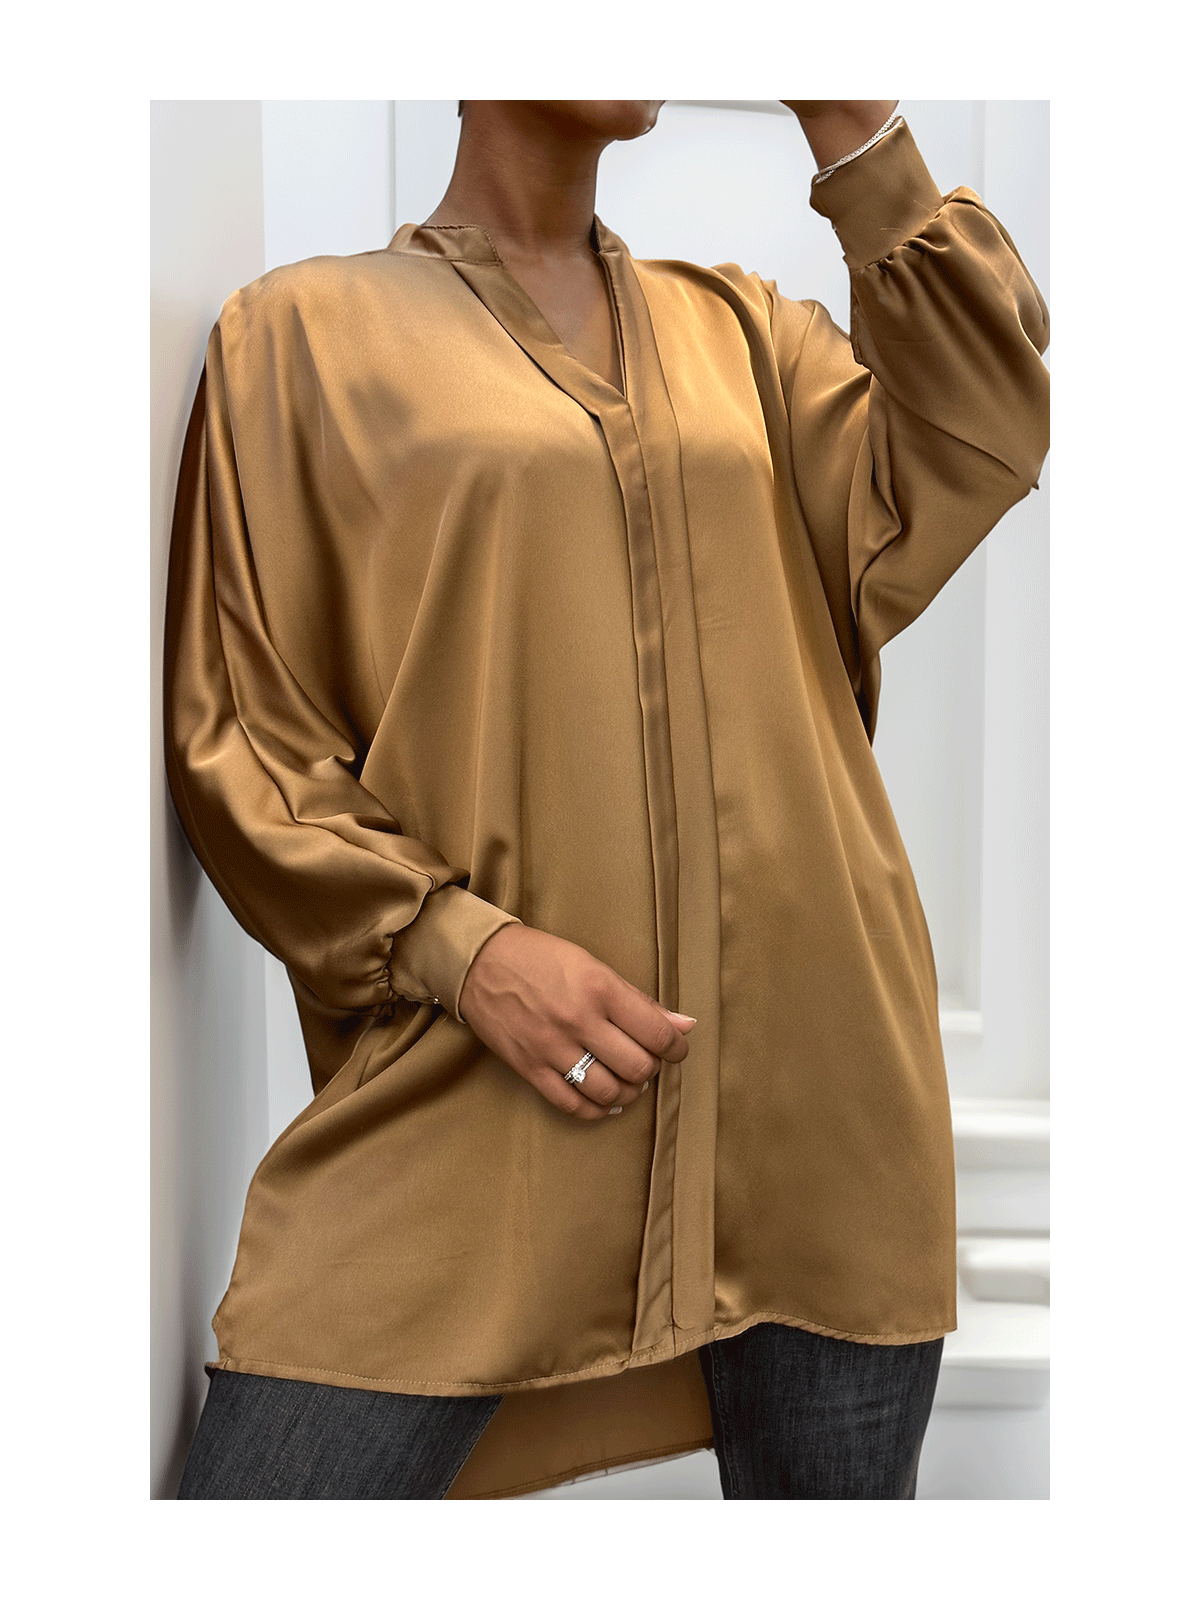 Robe tunique camel - 2